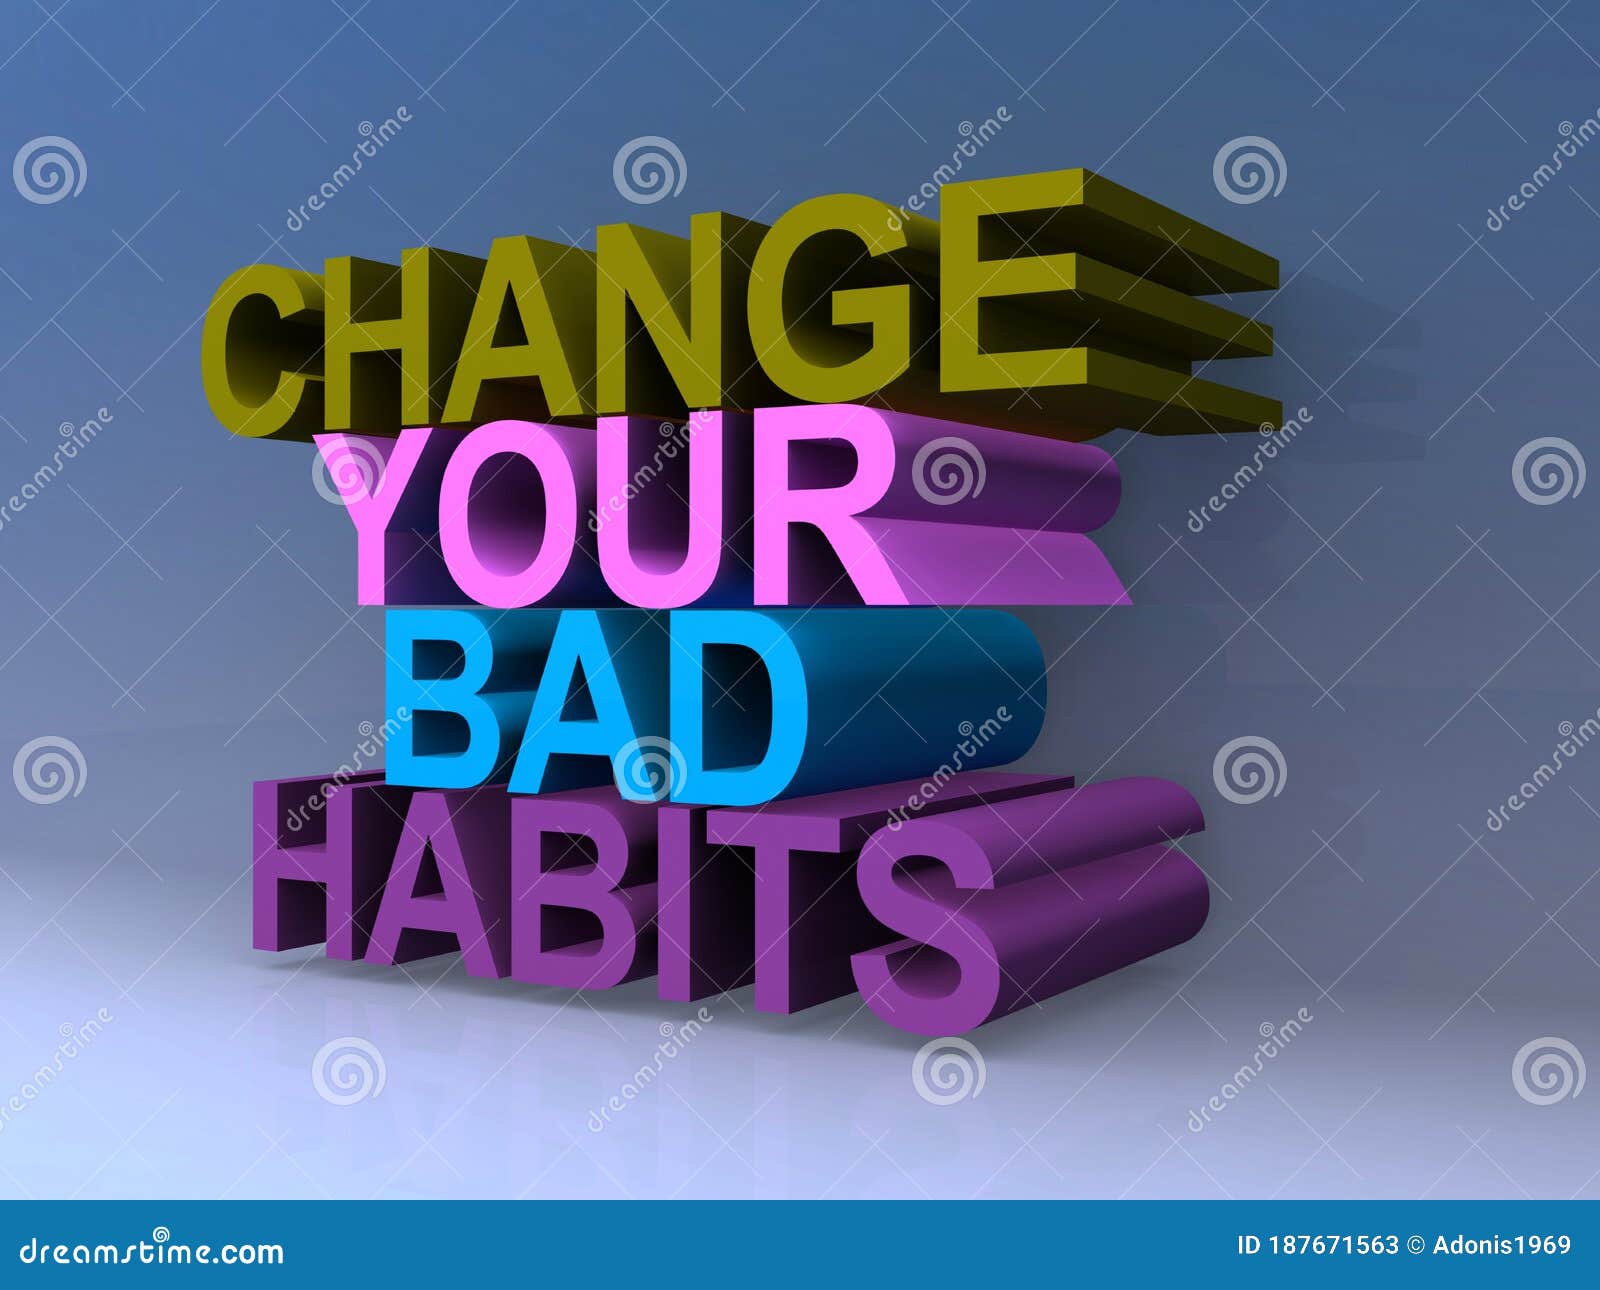 Change your bad habits stock illustration. Illustration of concept